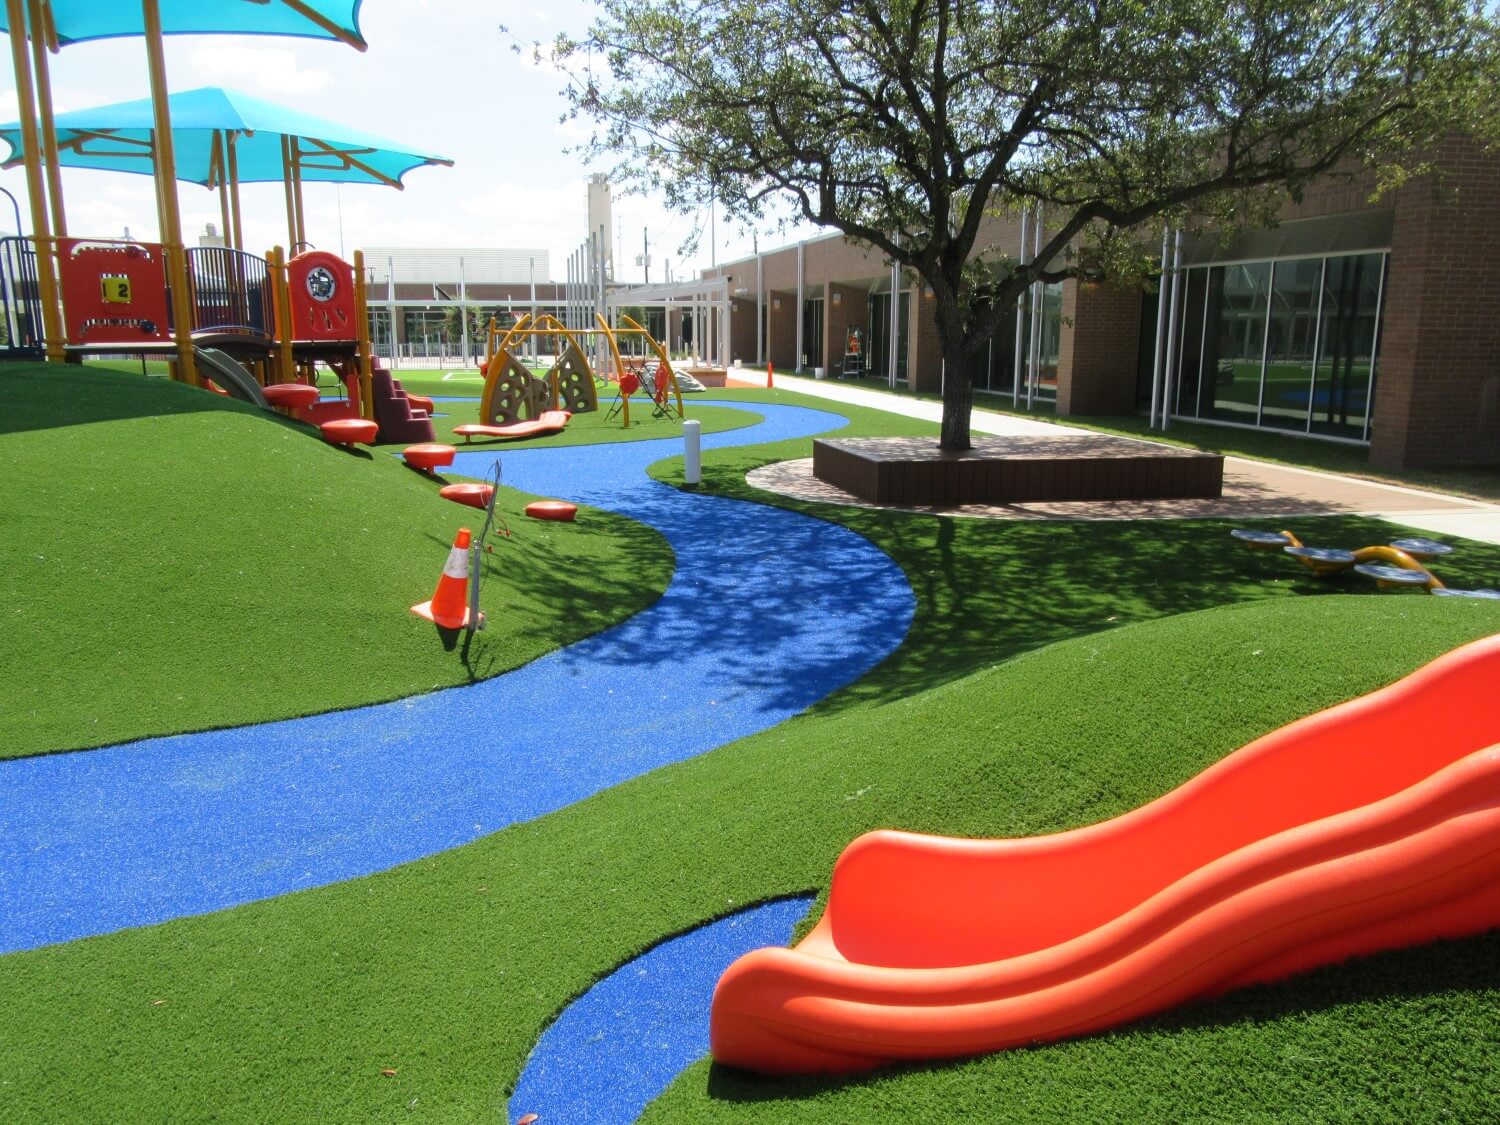 Artificial playground grass with orange slide